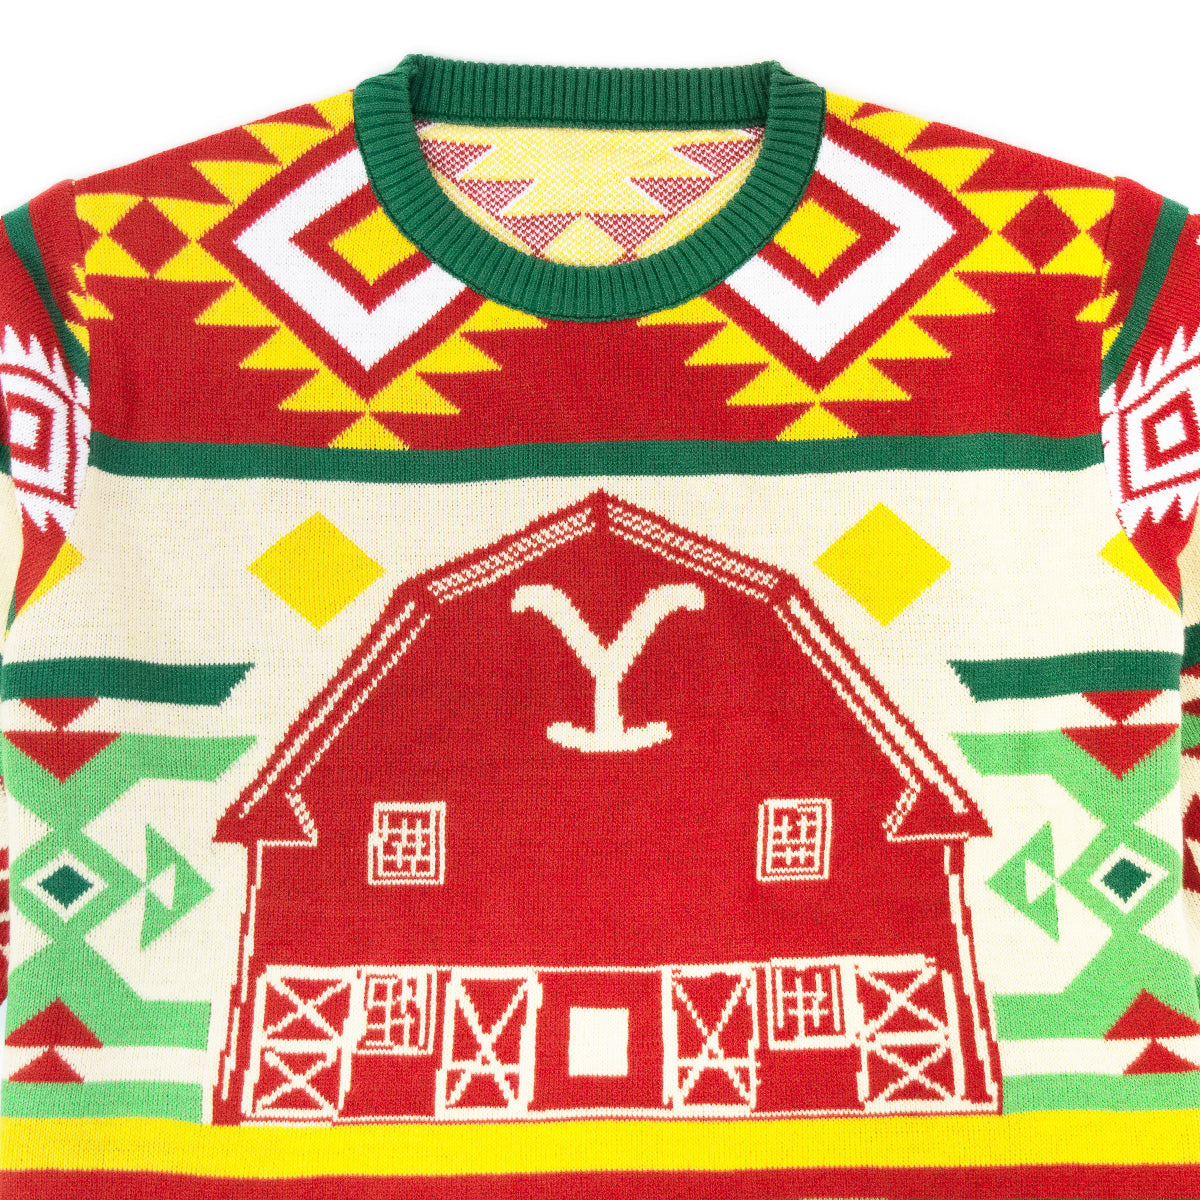 Yellowstone Barn Holiday Sweater